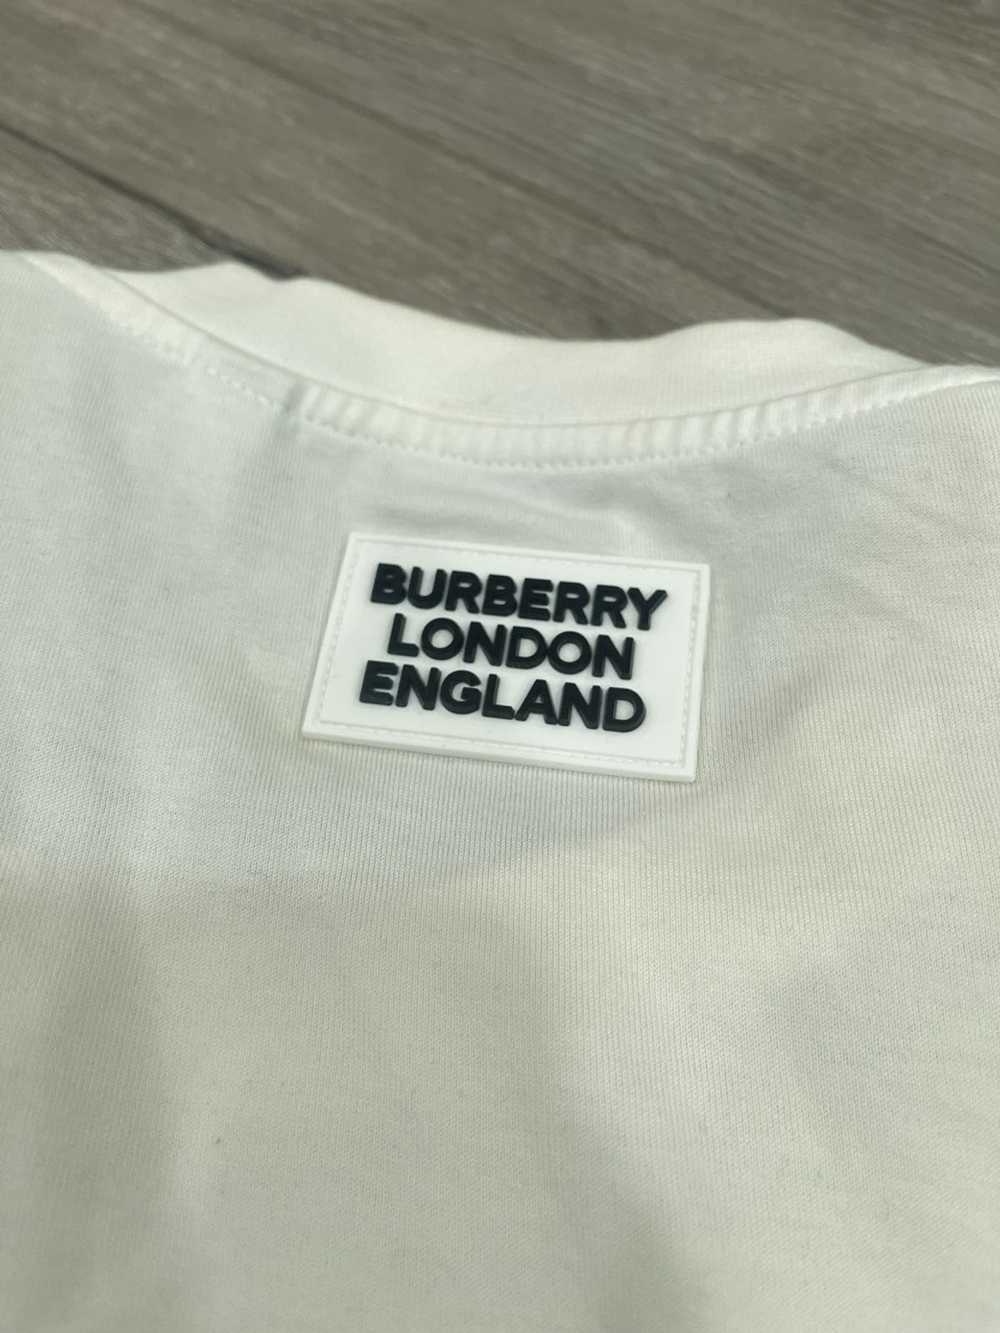 Burberry Burberry Logo Tee Shirt - image 4